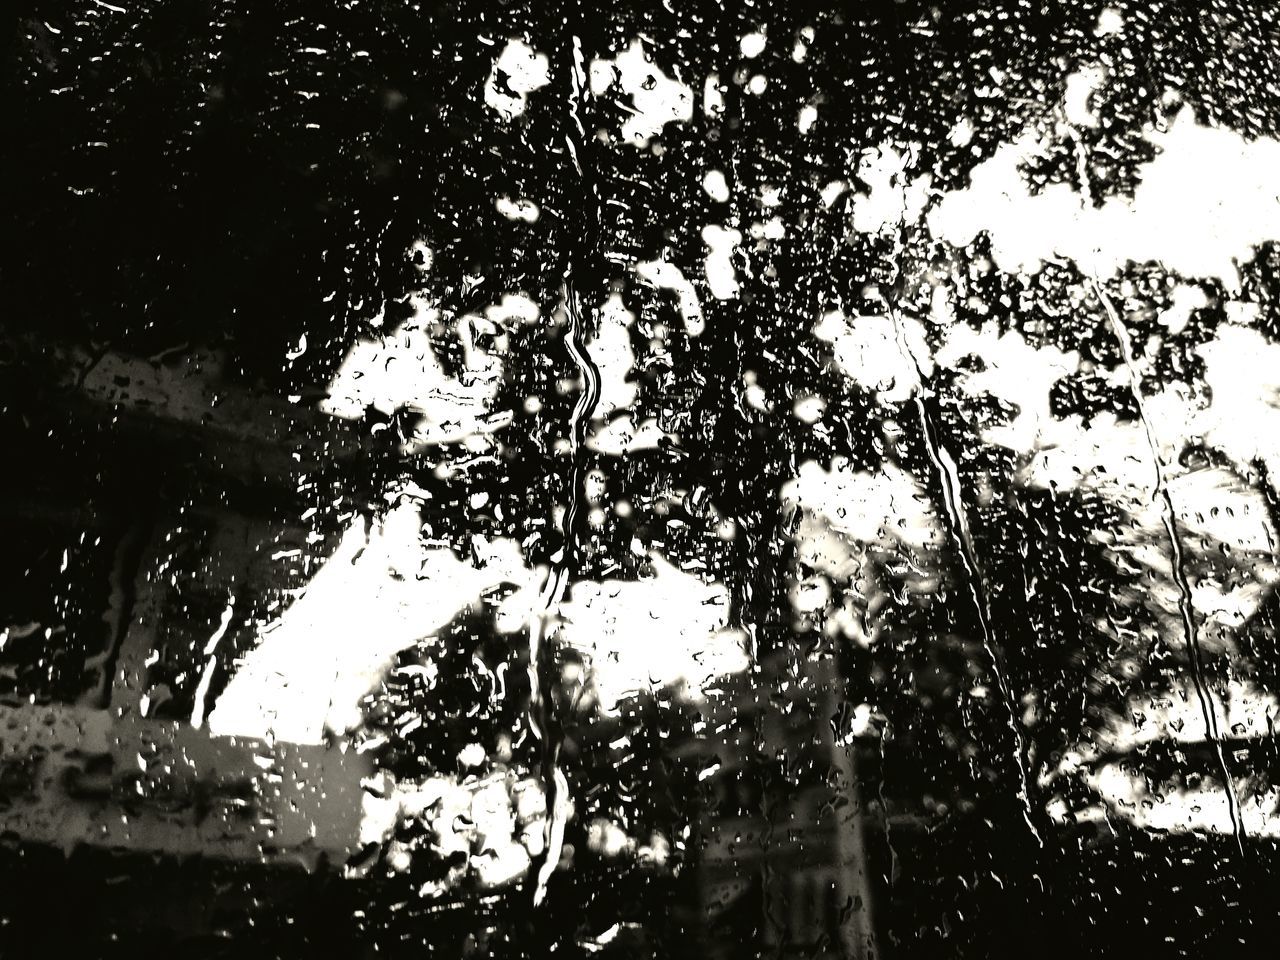 VIEW OF RAIN DROPS ON GLASS WINDOW